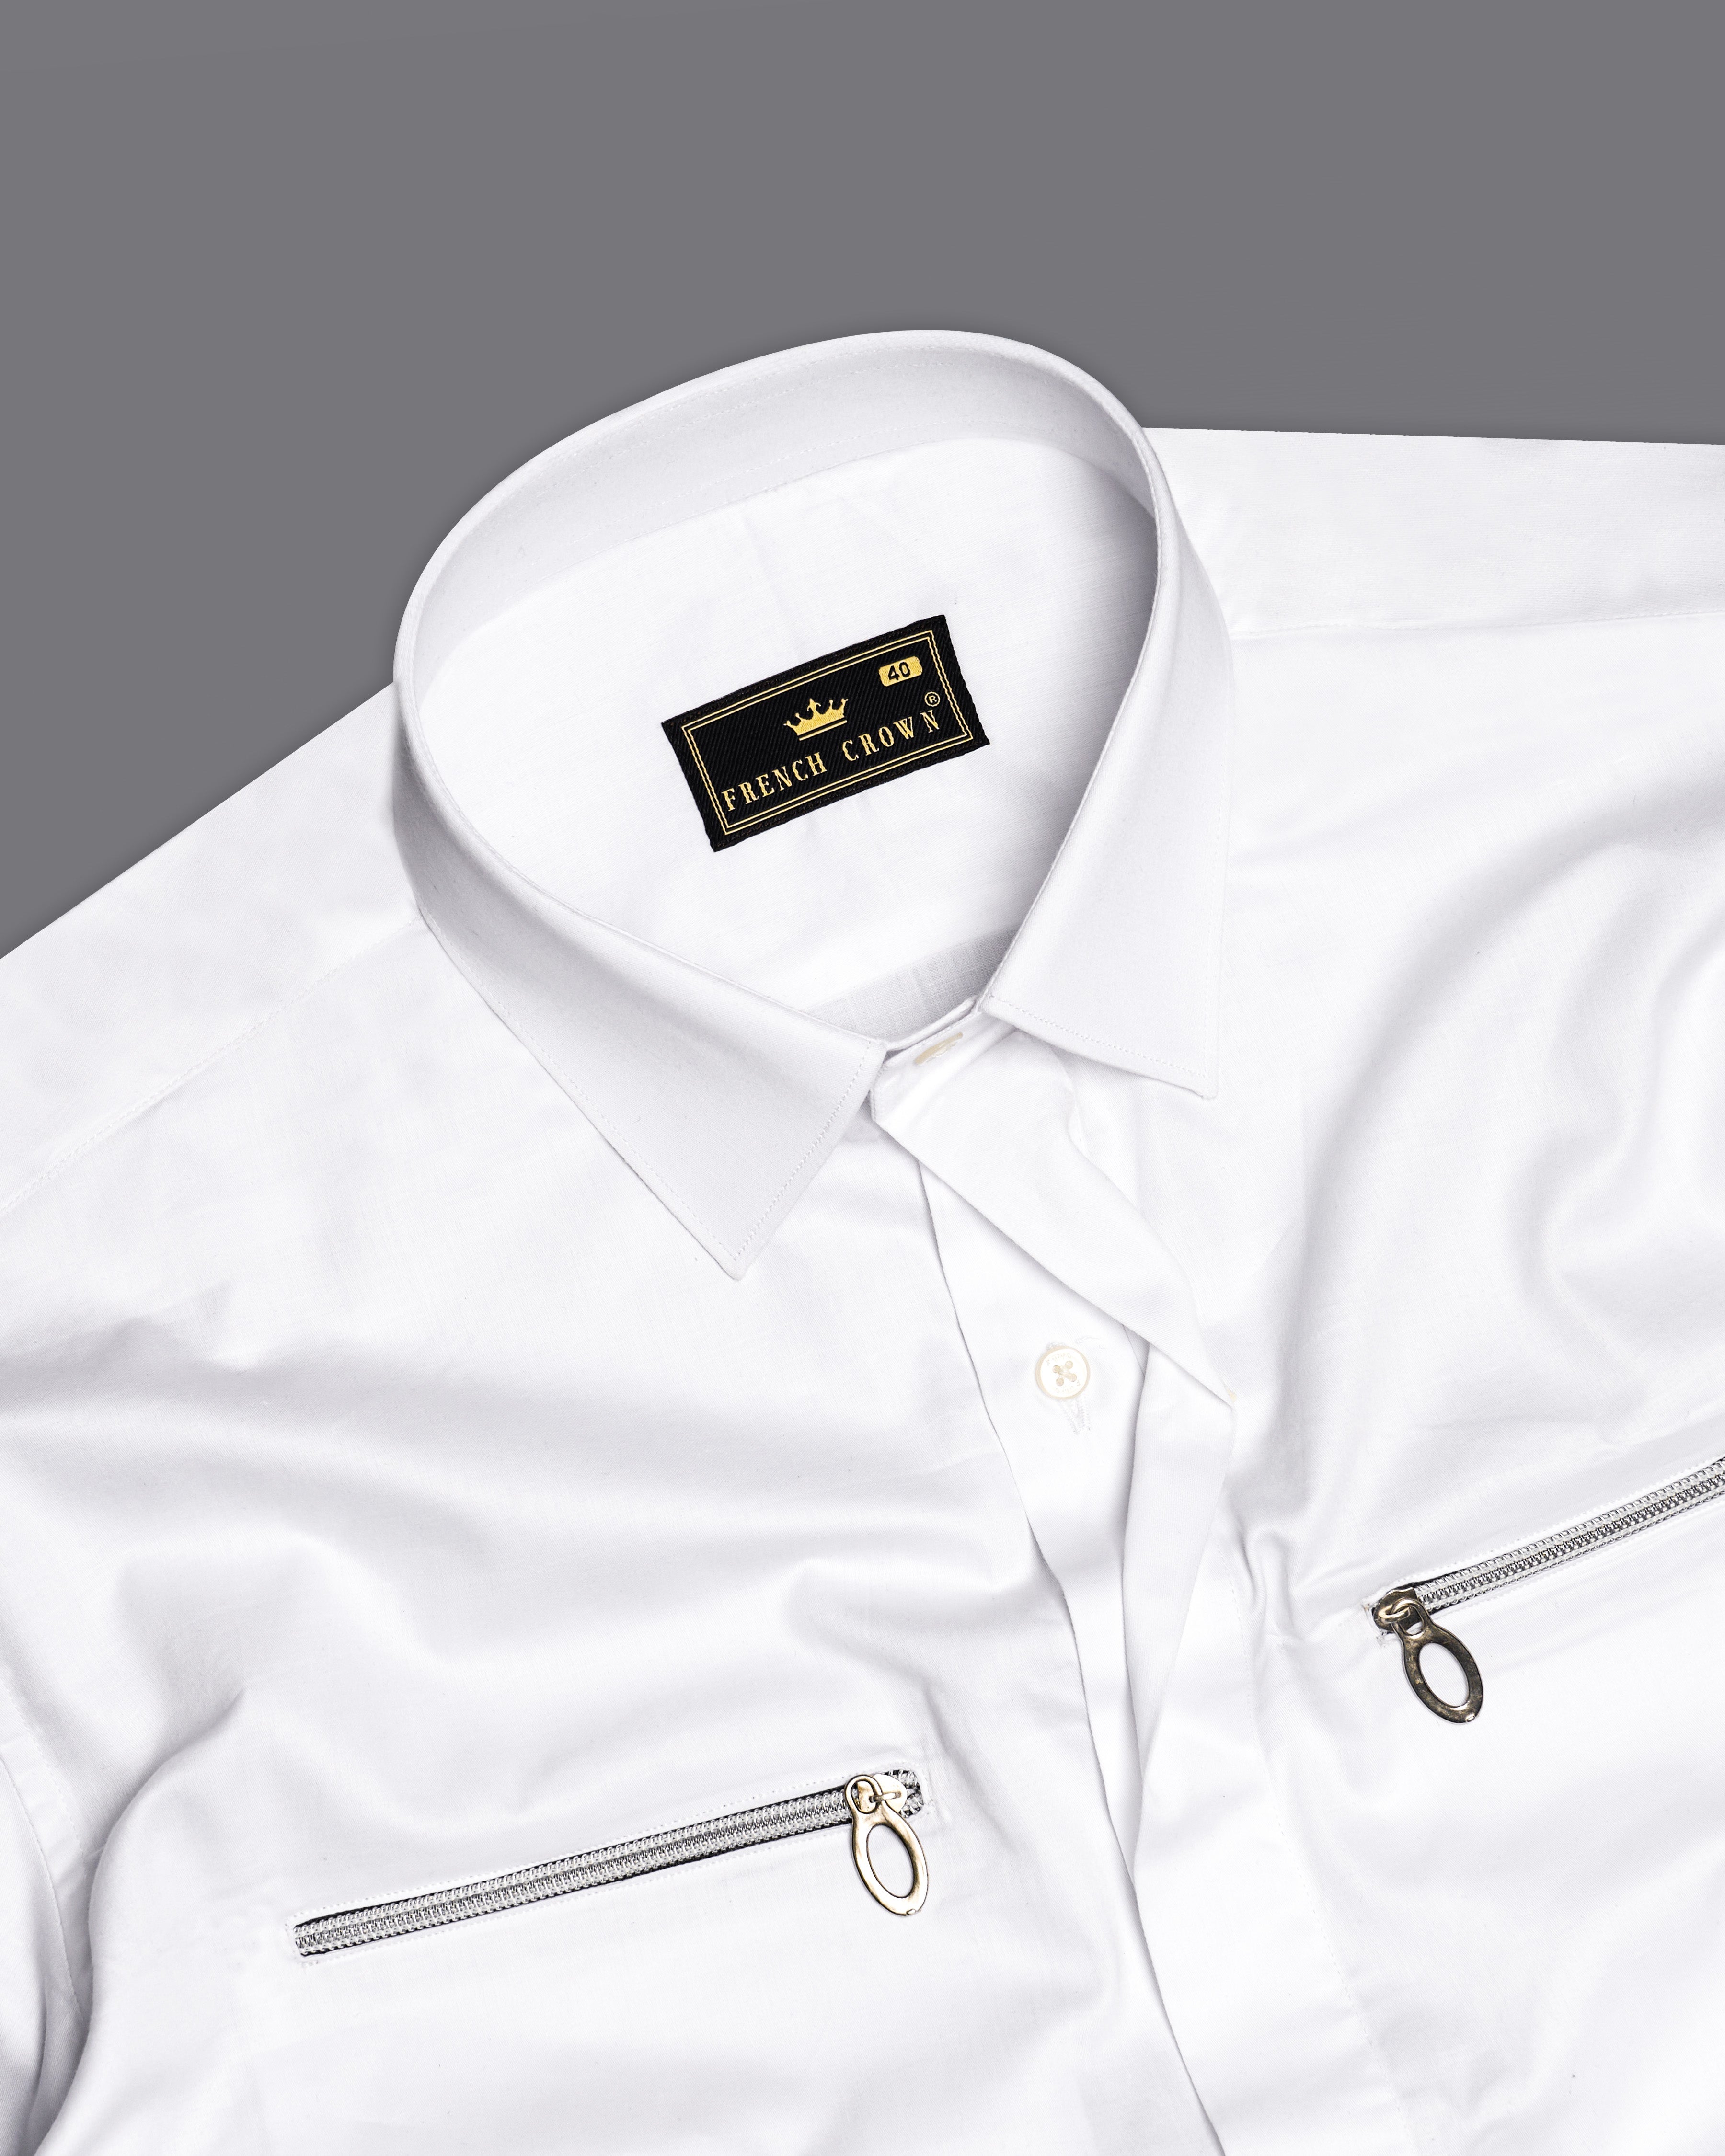 Bright White Subtle Sheen Super Soft Premium Cotton Designer Shirt With Zipper Pockets 9655-P596-38, 9655-P596-H-38, 9655-P596-39, 9655-P596-H-39, 9655-P596-40, 9655-P596-H-40, 9655-P596-42, 9655-P596-H-42, 9655-P596-44, 9655-P596-H-44, 9655-P596-46, 9655-P596-H-46, 9655-P596-48, 9655-P596-H-48, 9655-P596-50, 9655-P596-H-50, 9655-P596-52, 9655-P596-H-52